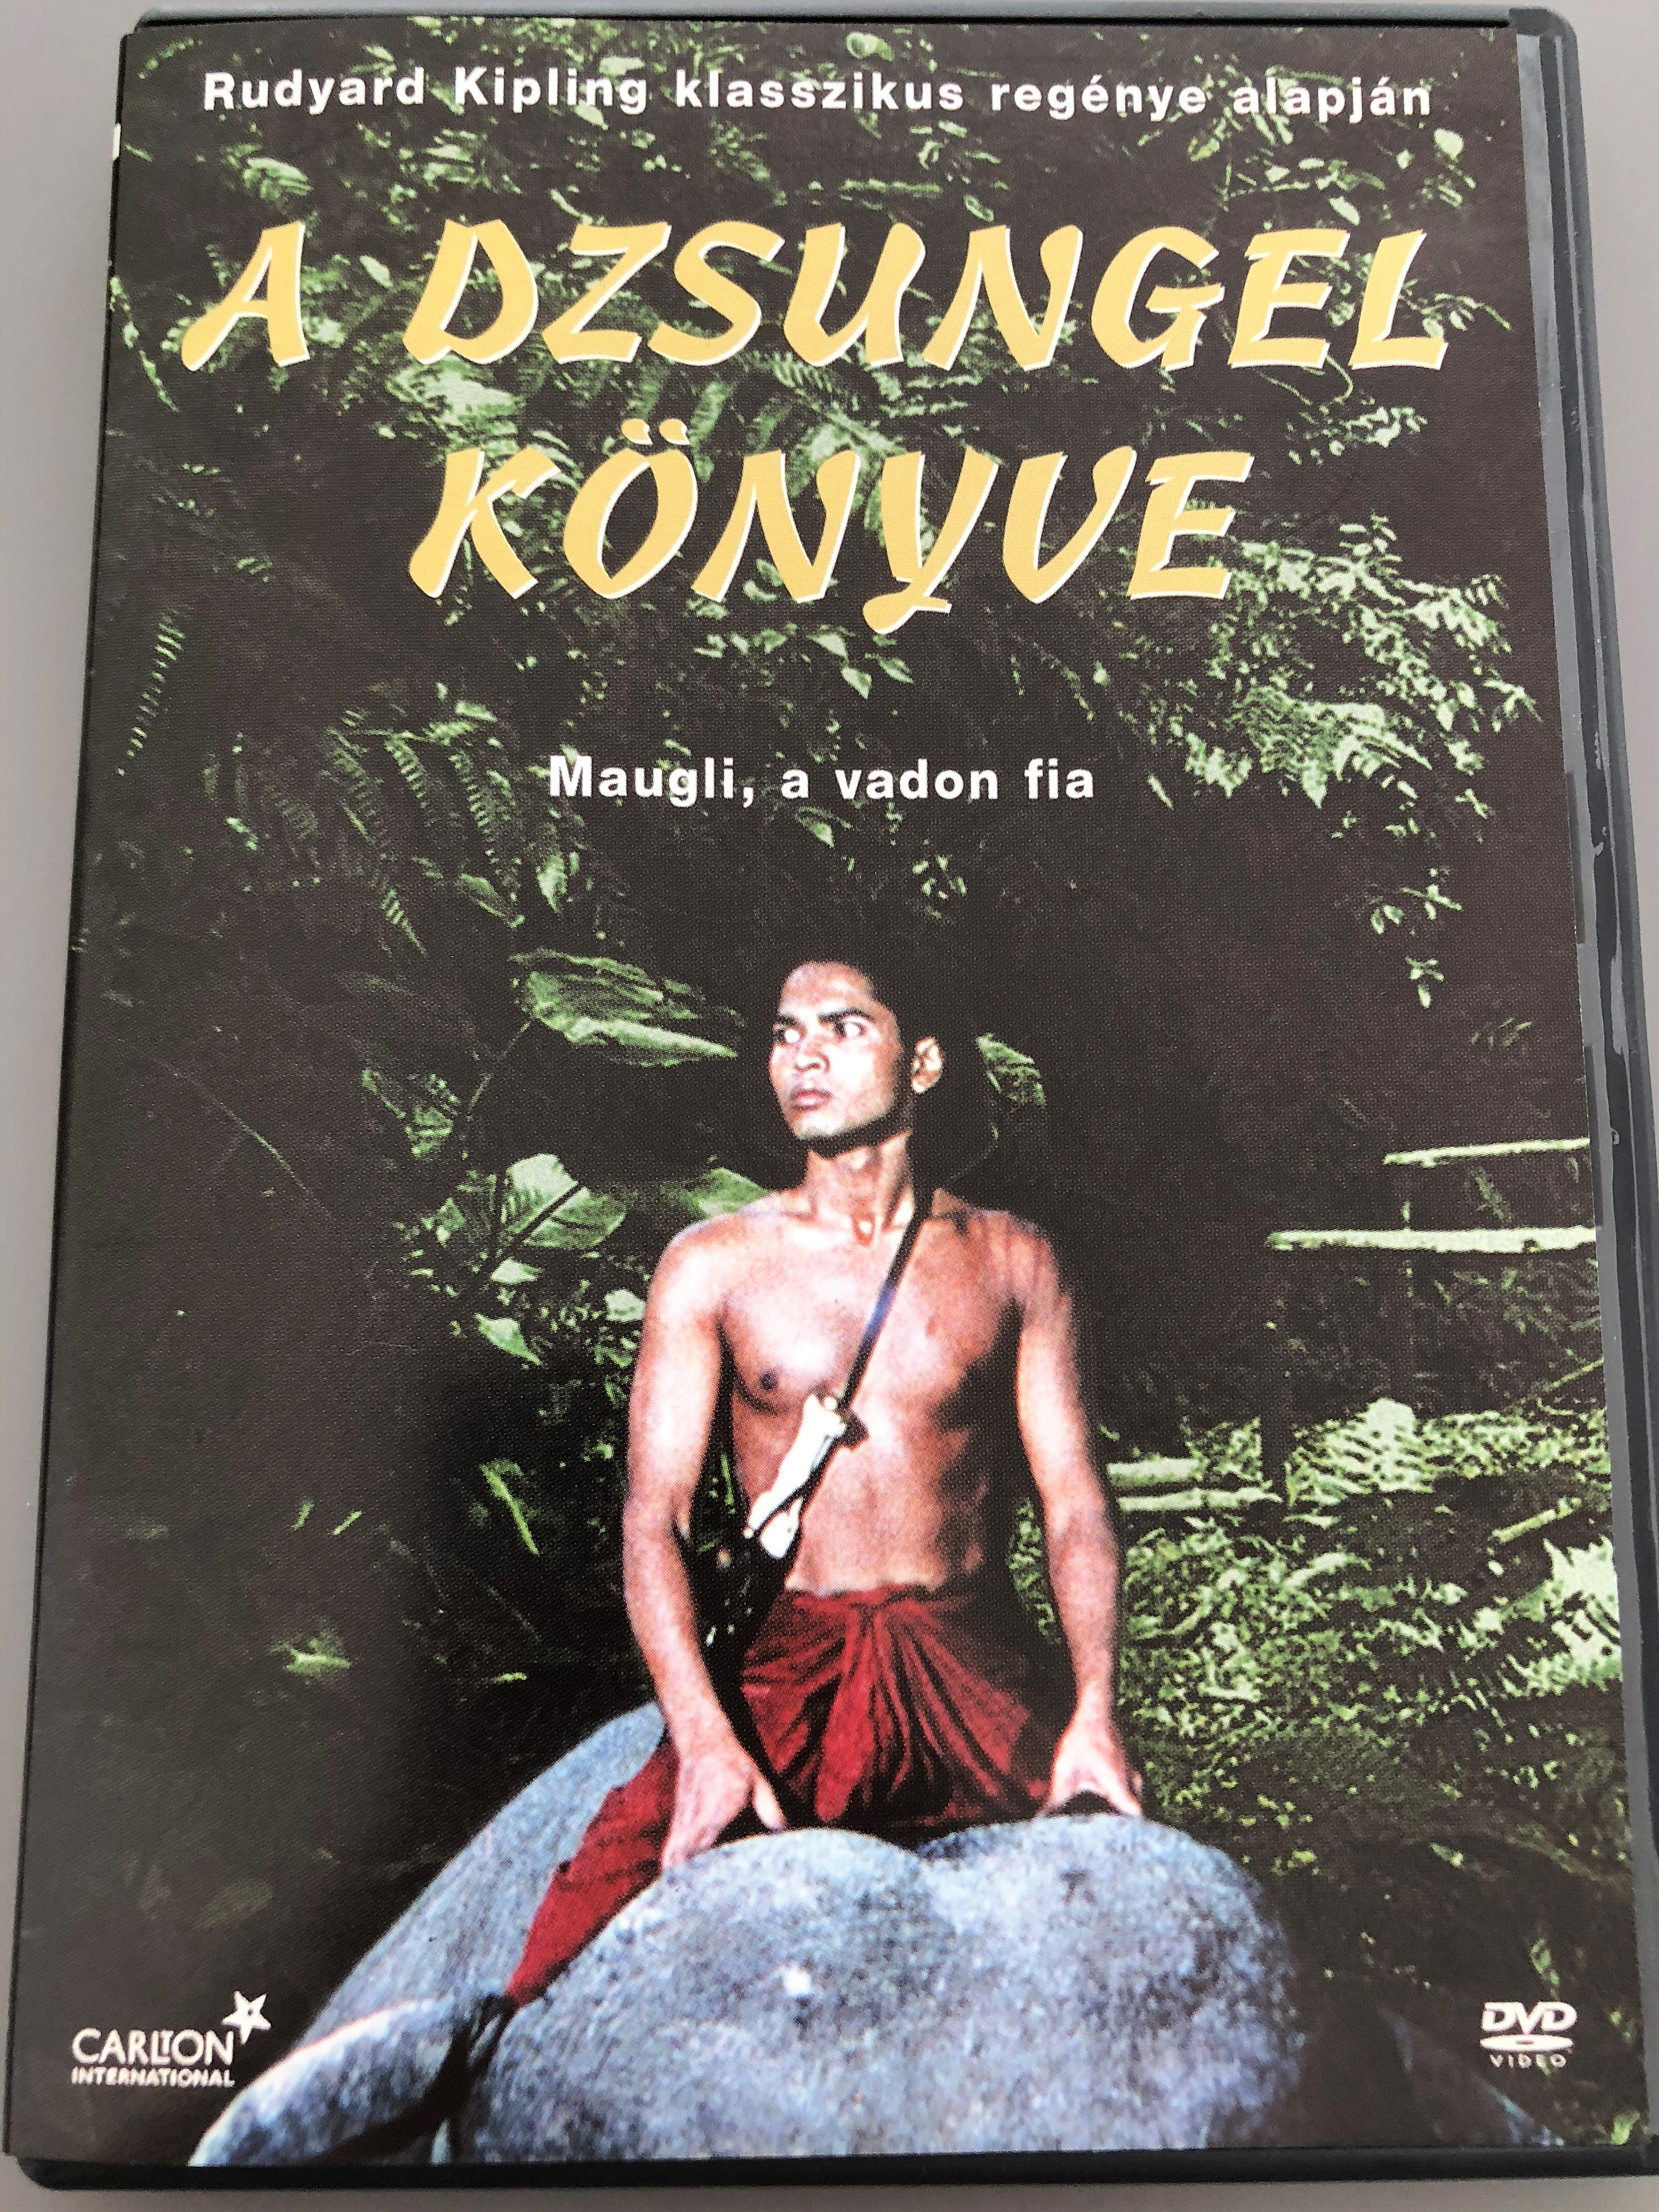 rudyard-kipling-s-jungle-book-dvd-1942-a-dzsungel-k-nyve-directed-by-zoltan-korda-starring-sabu-patricia-o-rourke-joseph-calleia-john-qualen-frank-puglia-rosemary-decamp-maugli-a-vadon-fia-kipling-klasszikus-reg-1-.jpg